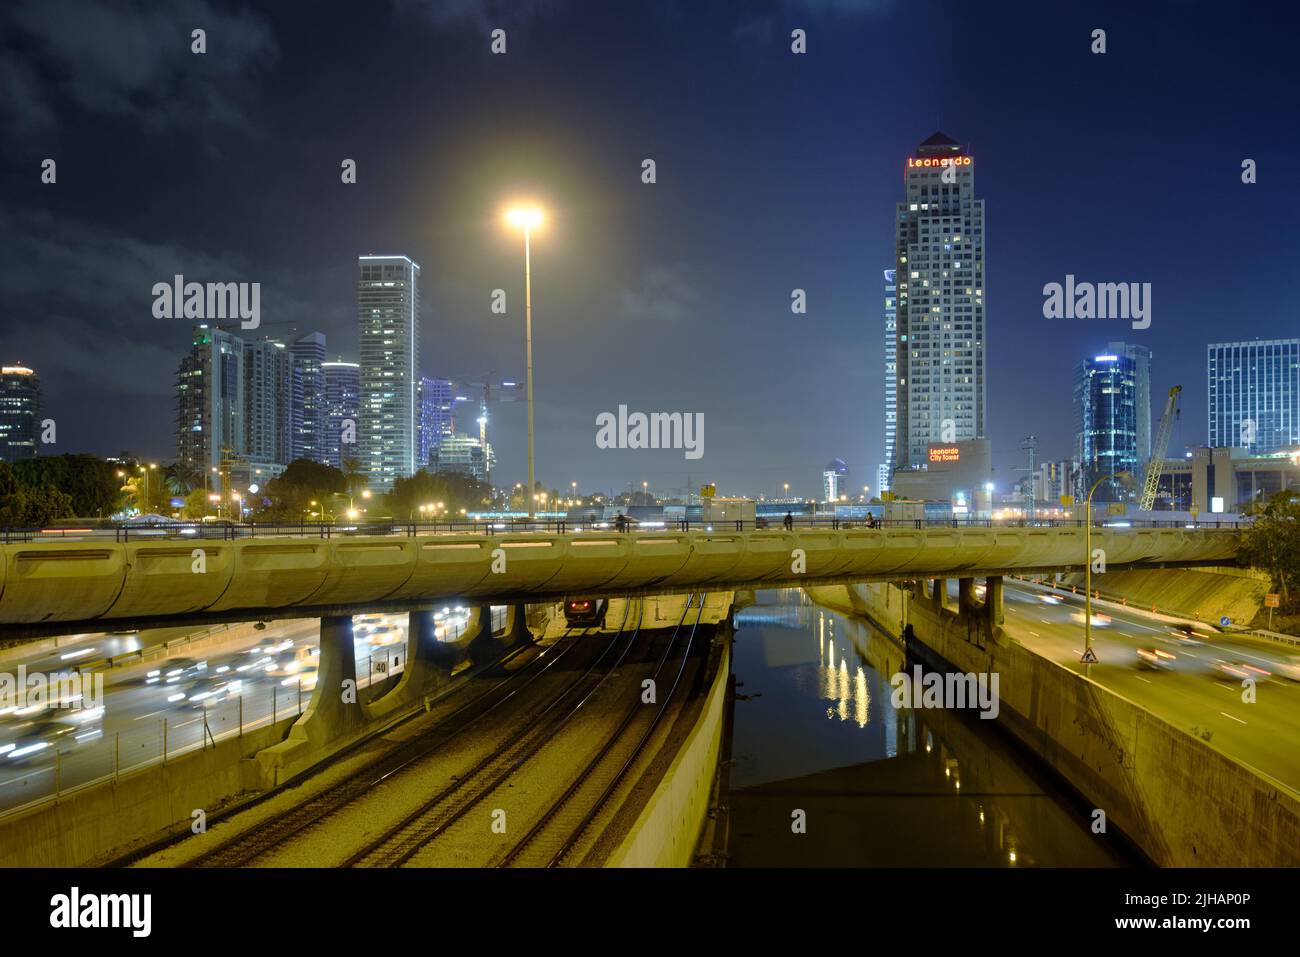 Tel Aviv, Israel - March 20, 2014: Night view of car traffic on the bridge across Ayalon river Stock Photo